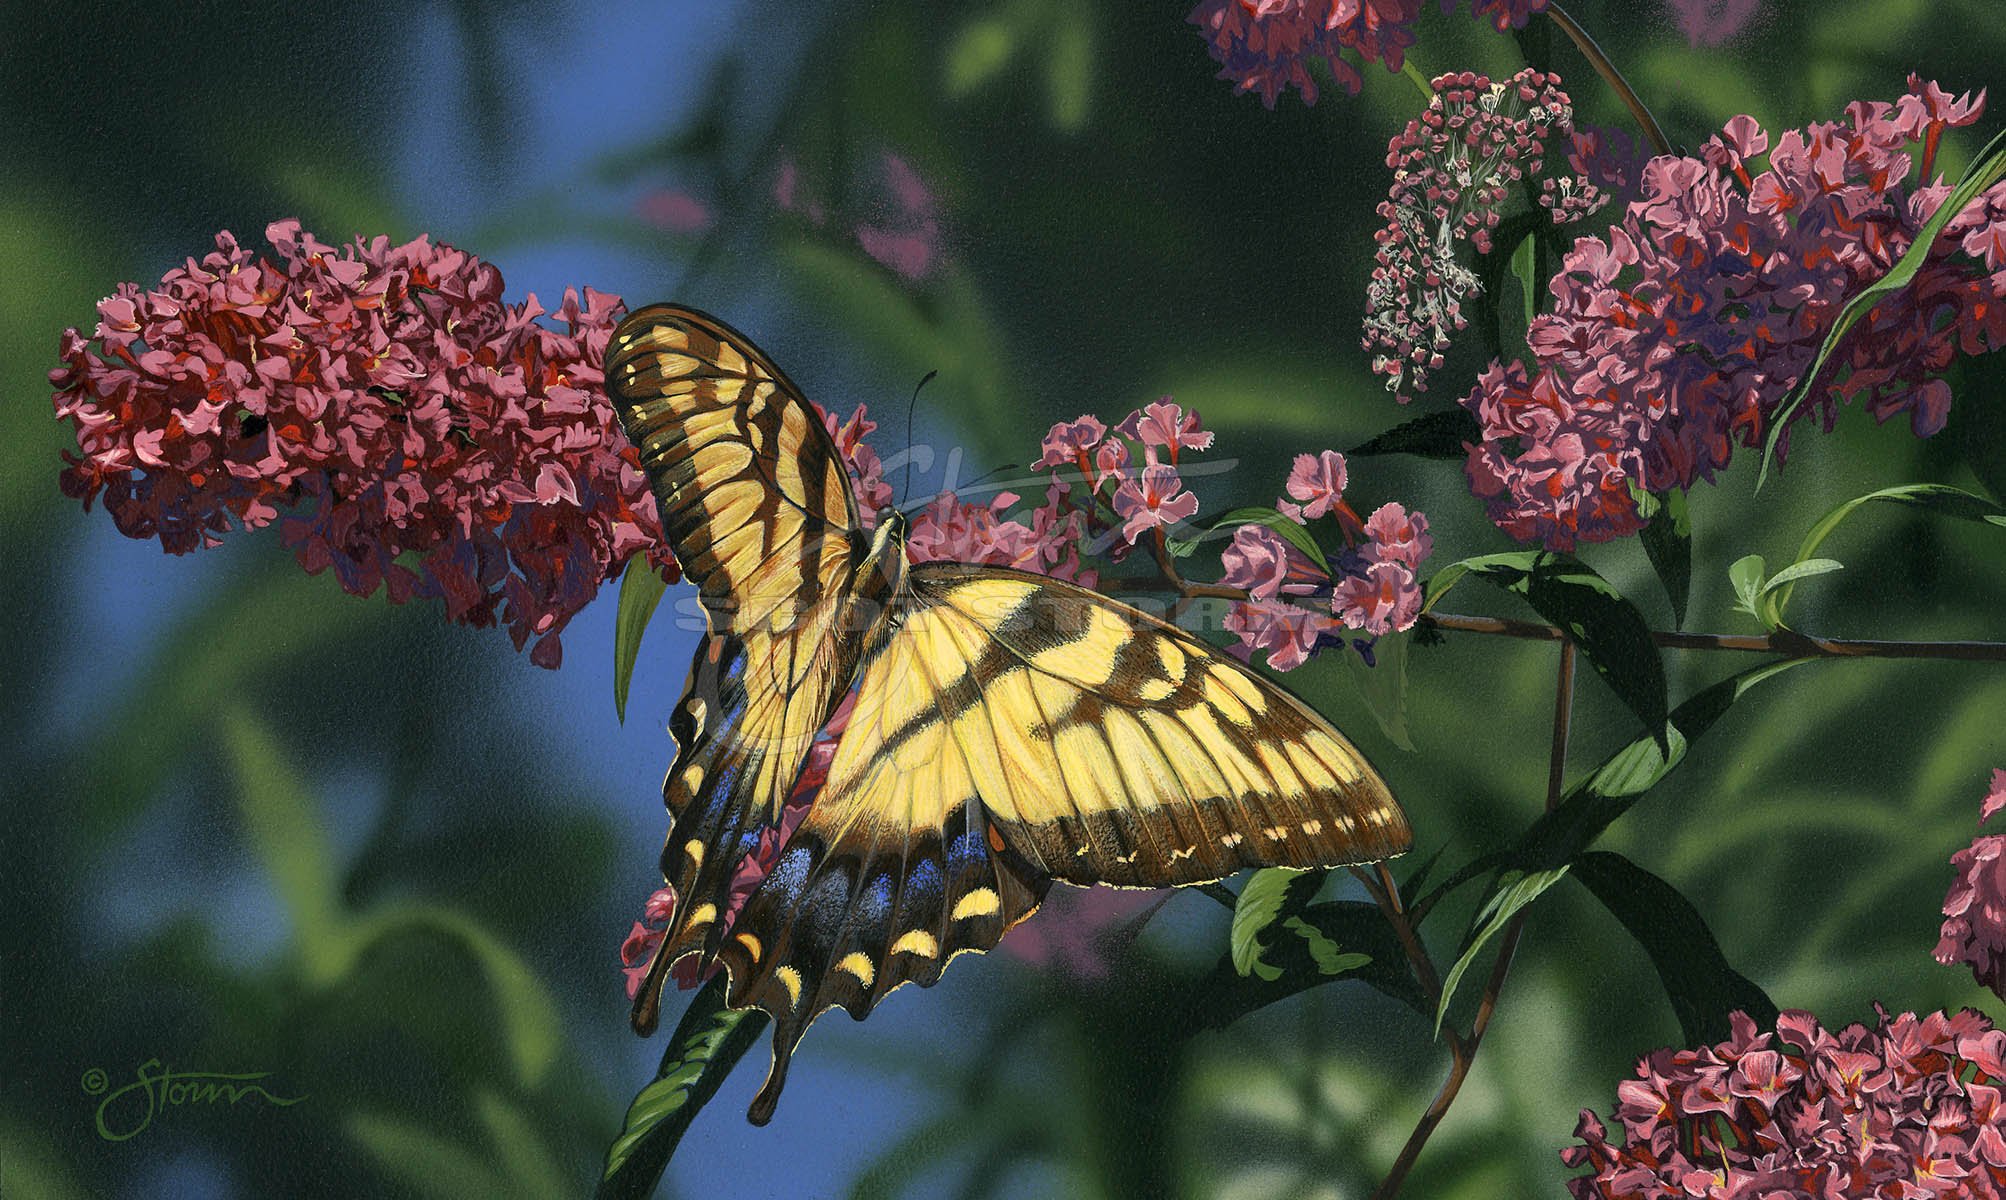 Tigertail+swallowtail+butterfly+Scot Storm+wildlife+art+prints+original+painting.jpg